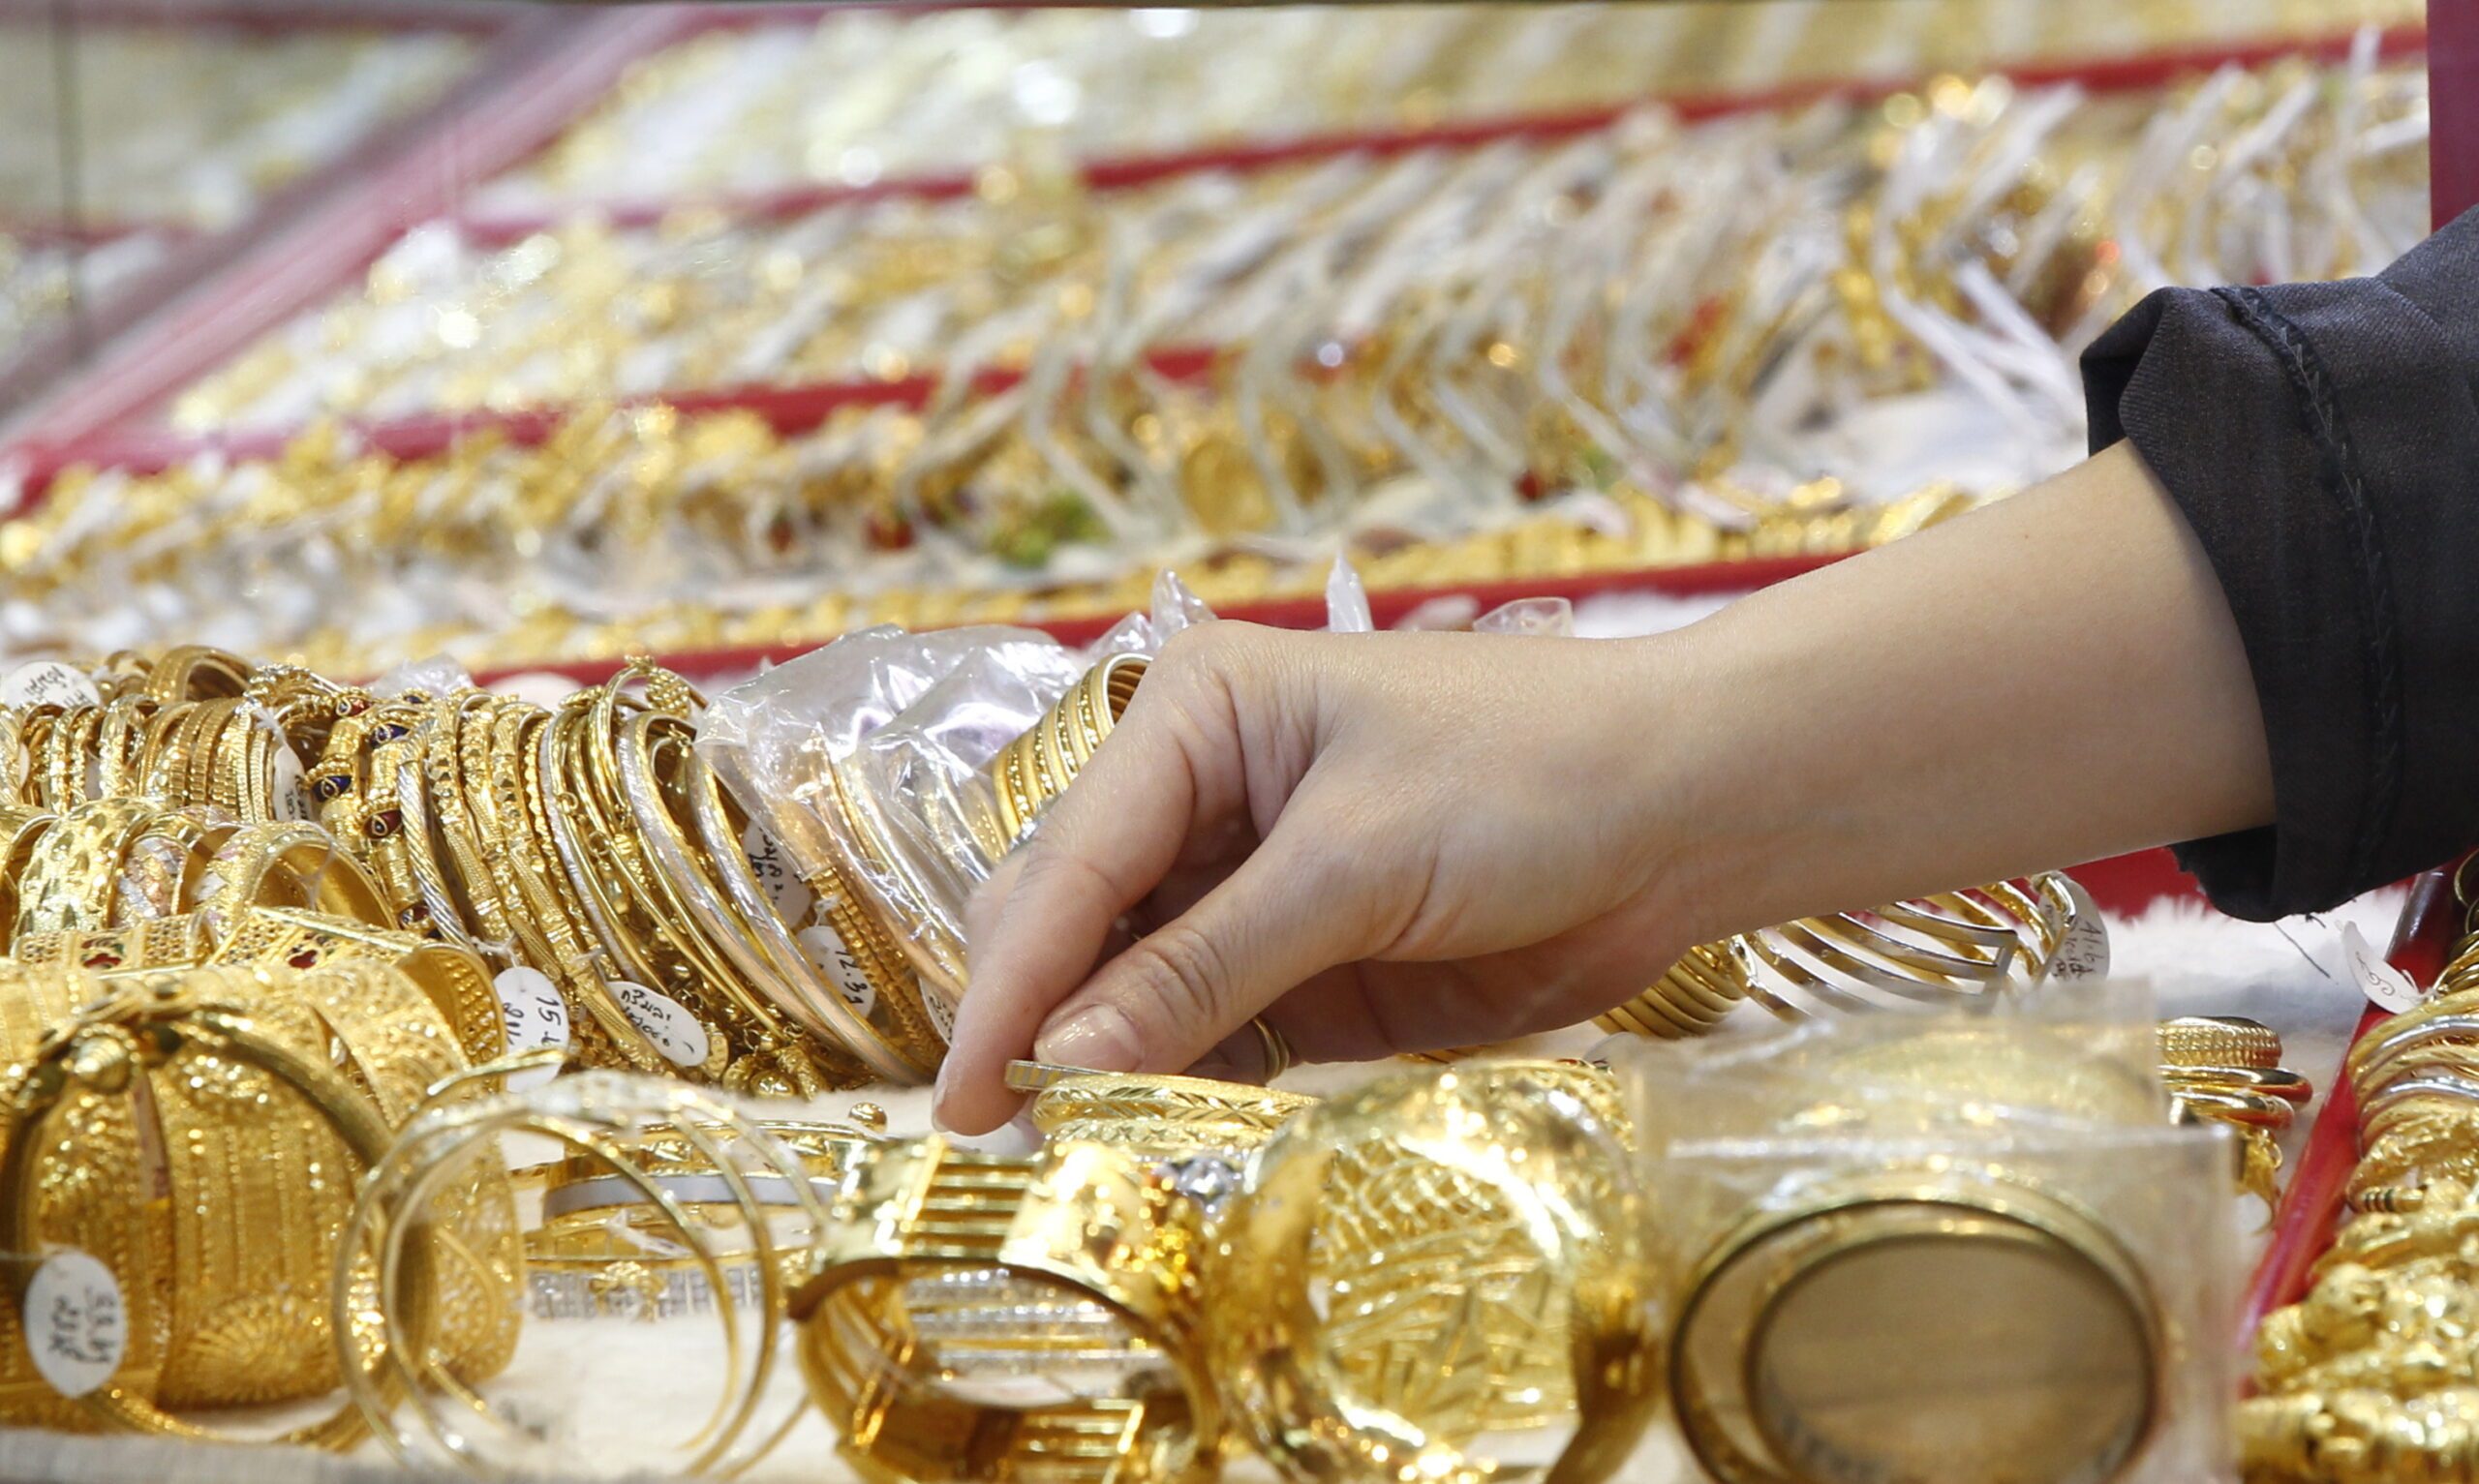 Economic unrest fuels gold demand – industry body